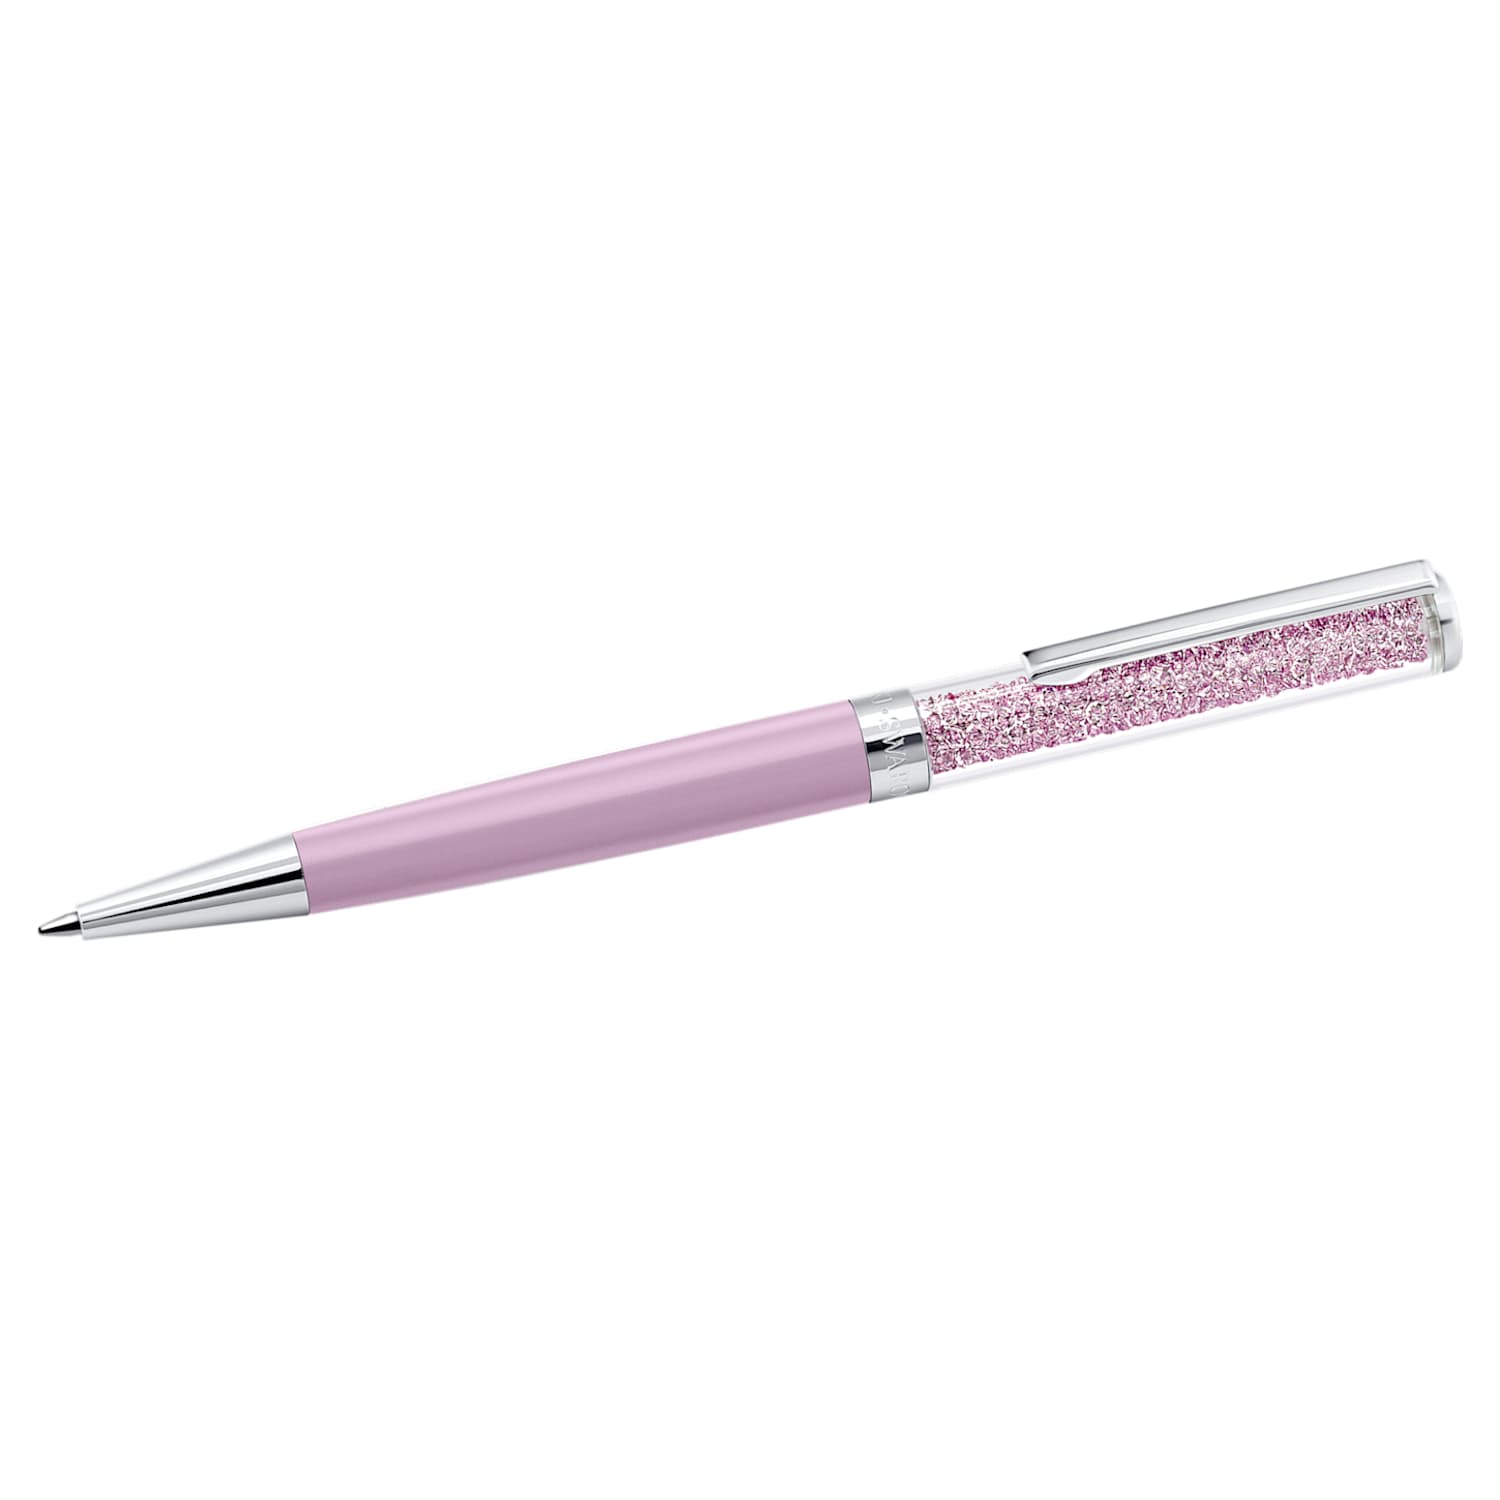 Doelwit Overzicht Mentaliteit Crystalline ballpoint pen, Purple, Purple lacquered, Chrome plated |  Swarovski